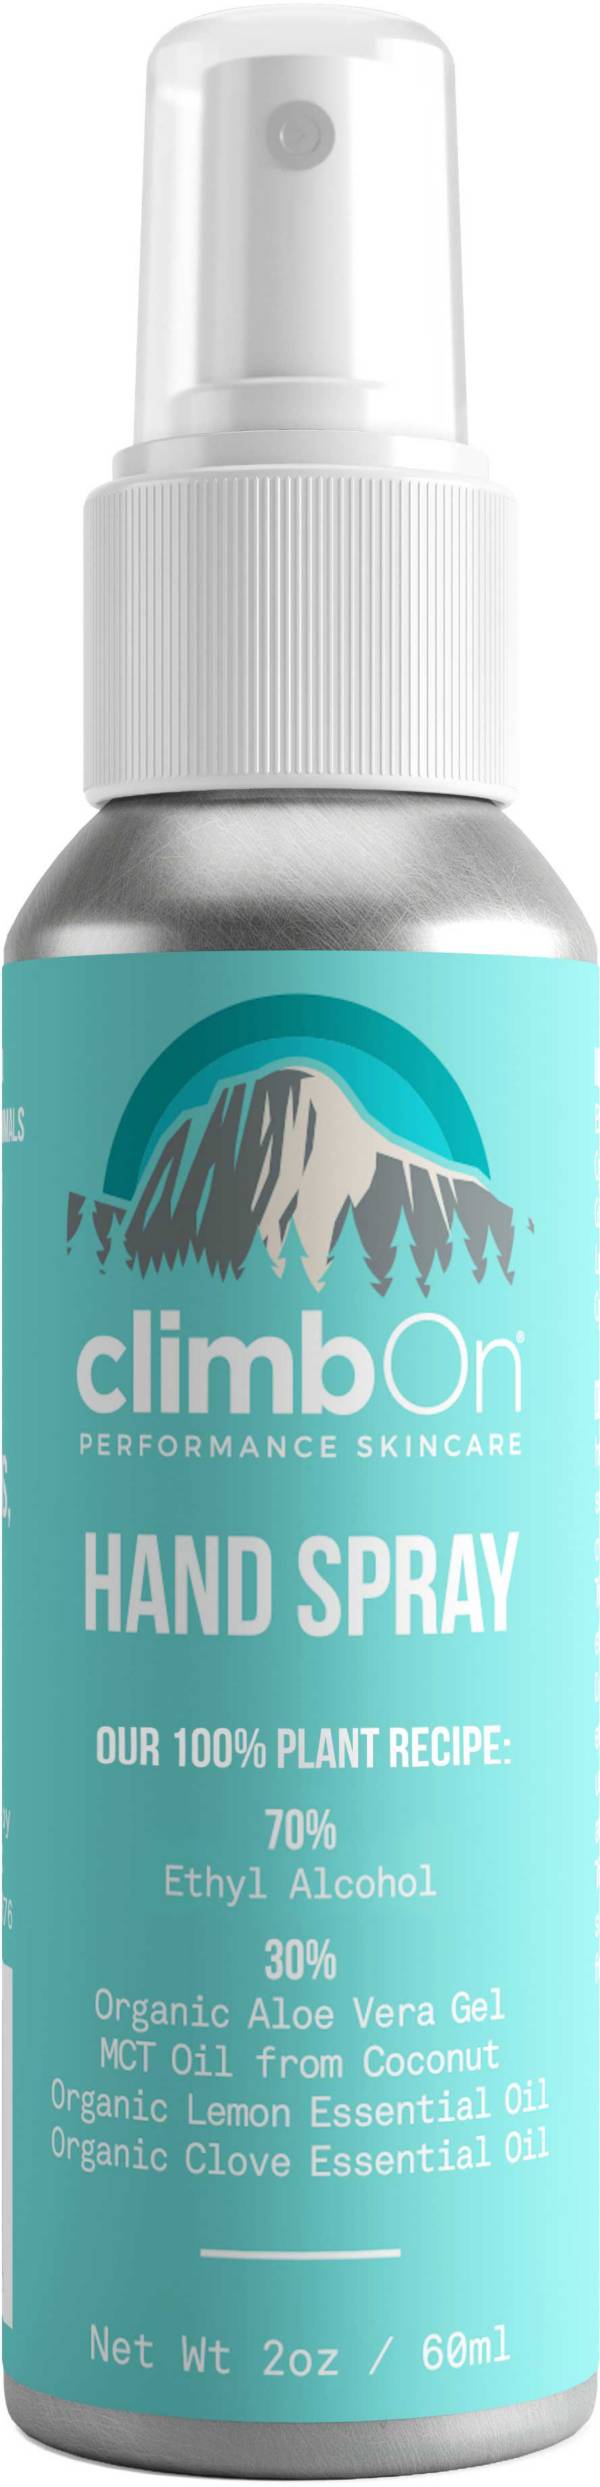 climbOn Hand Spray 2 oz product image